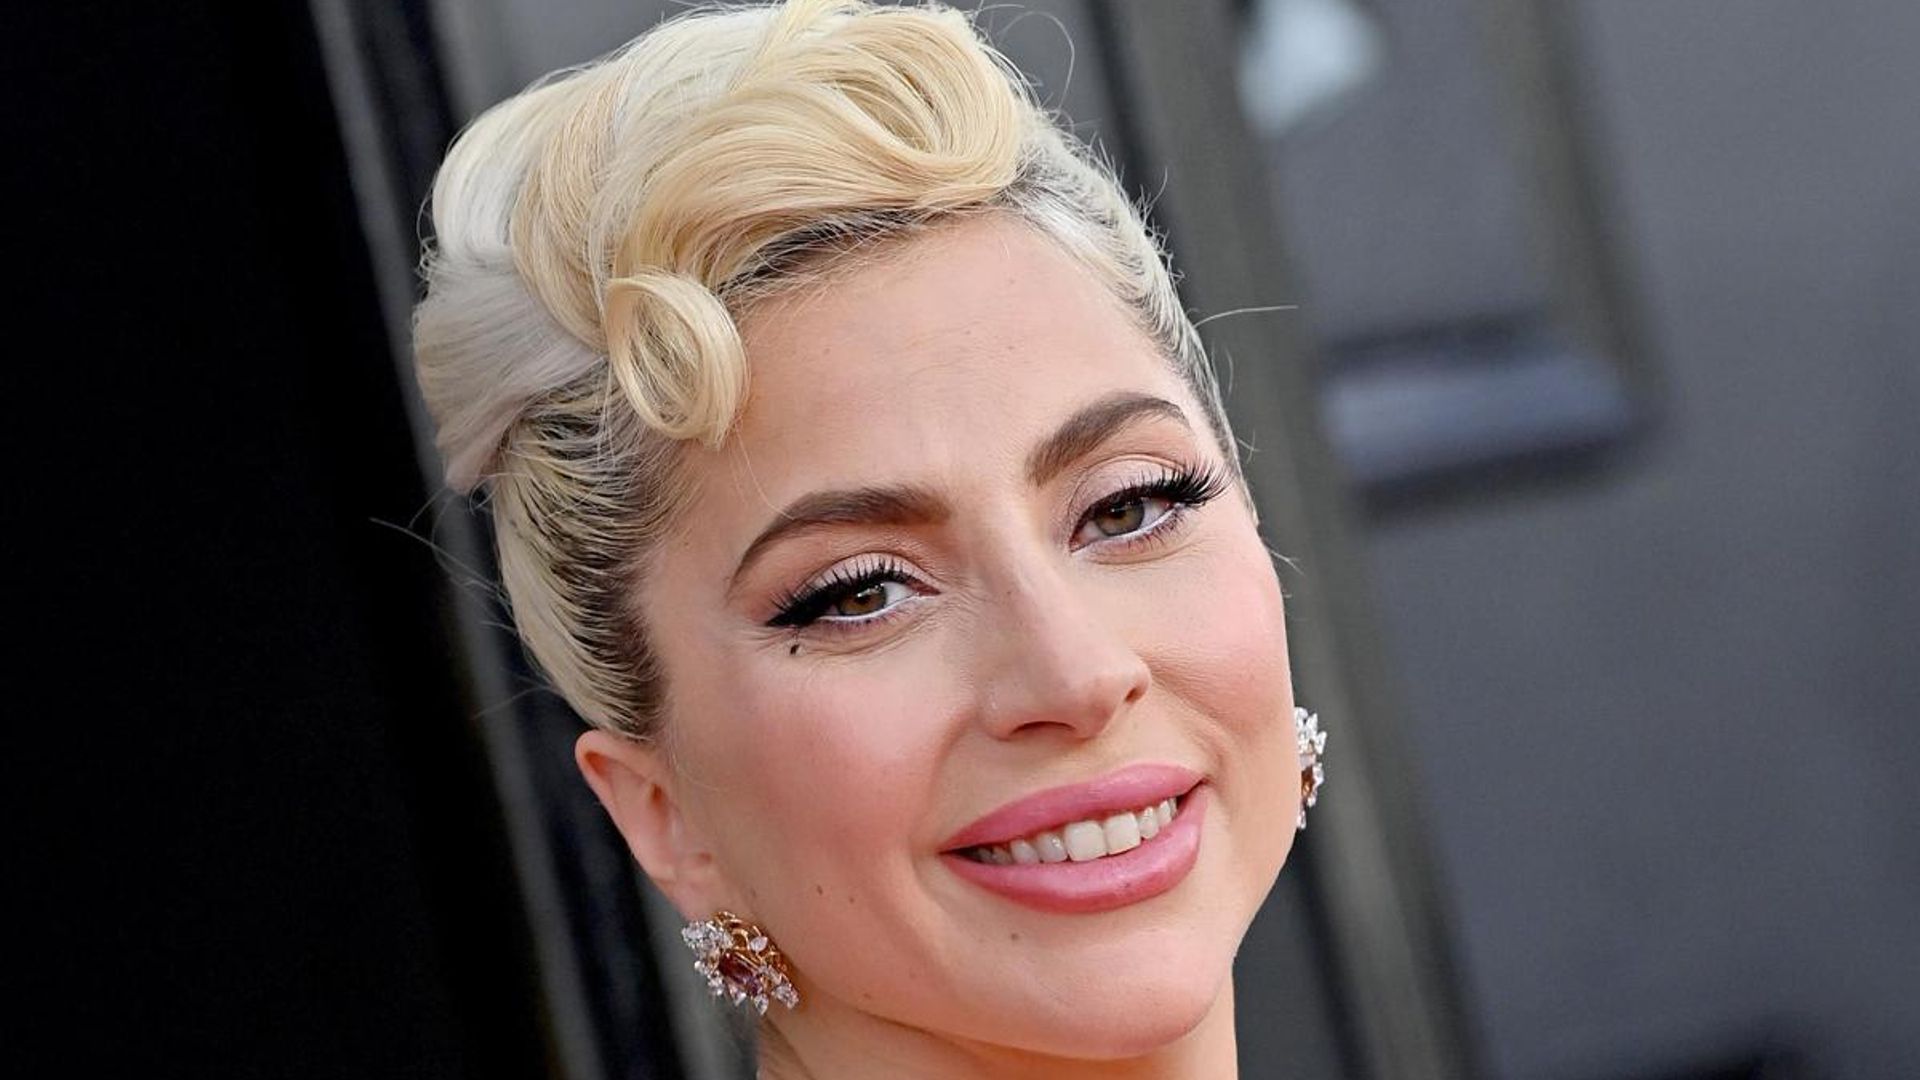 Lady Gaga shares makeup-free selfies in bed